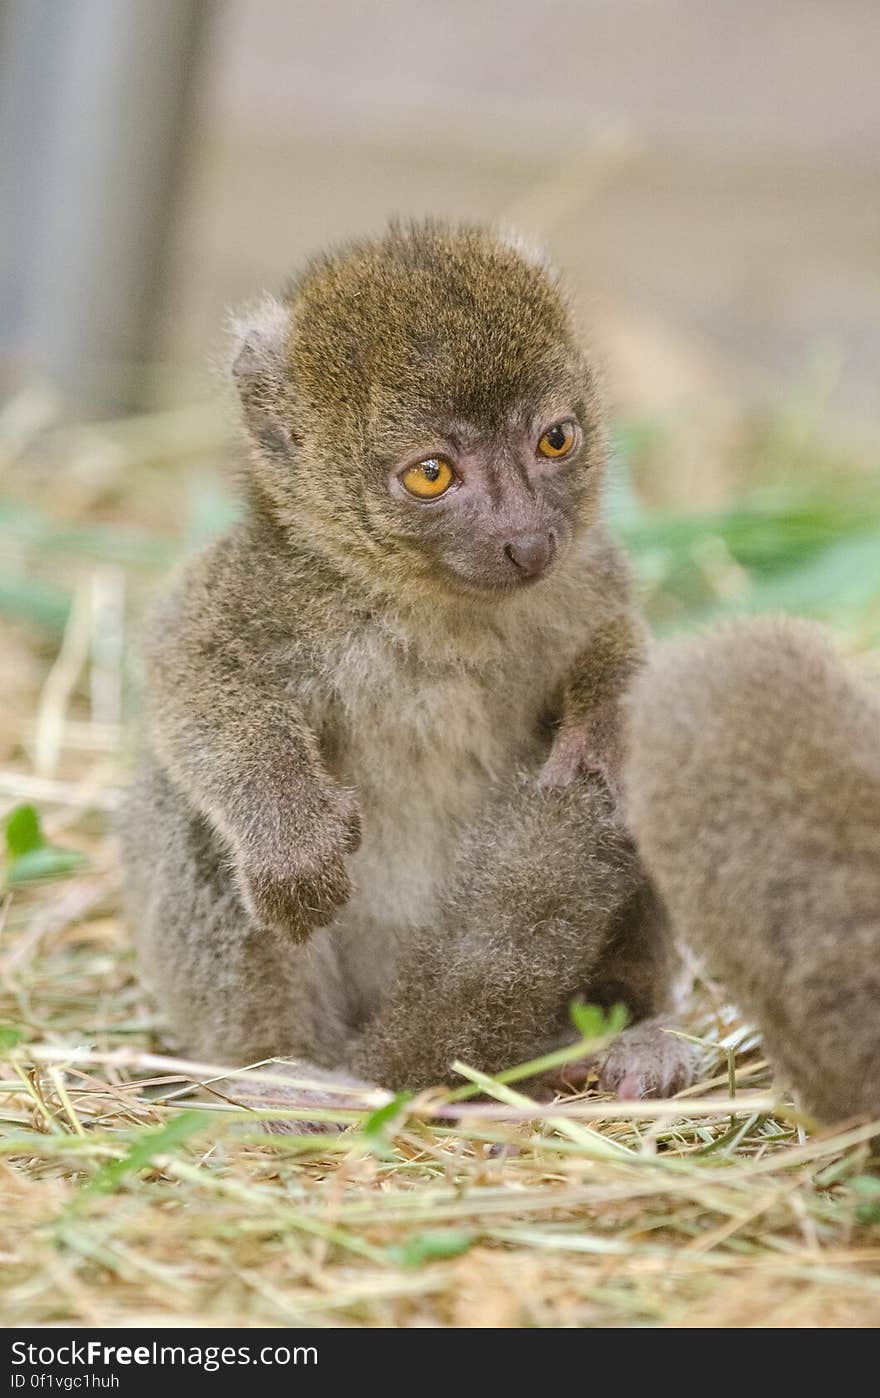 Greater bamboo lemur baby